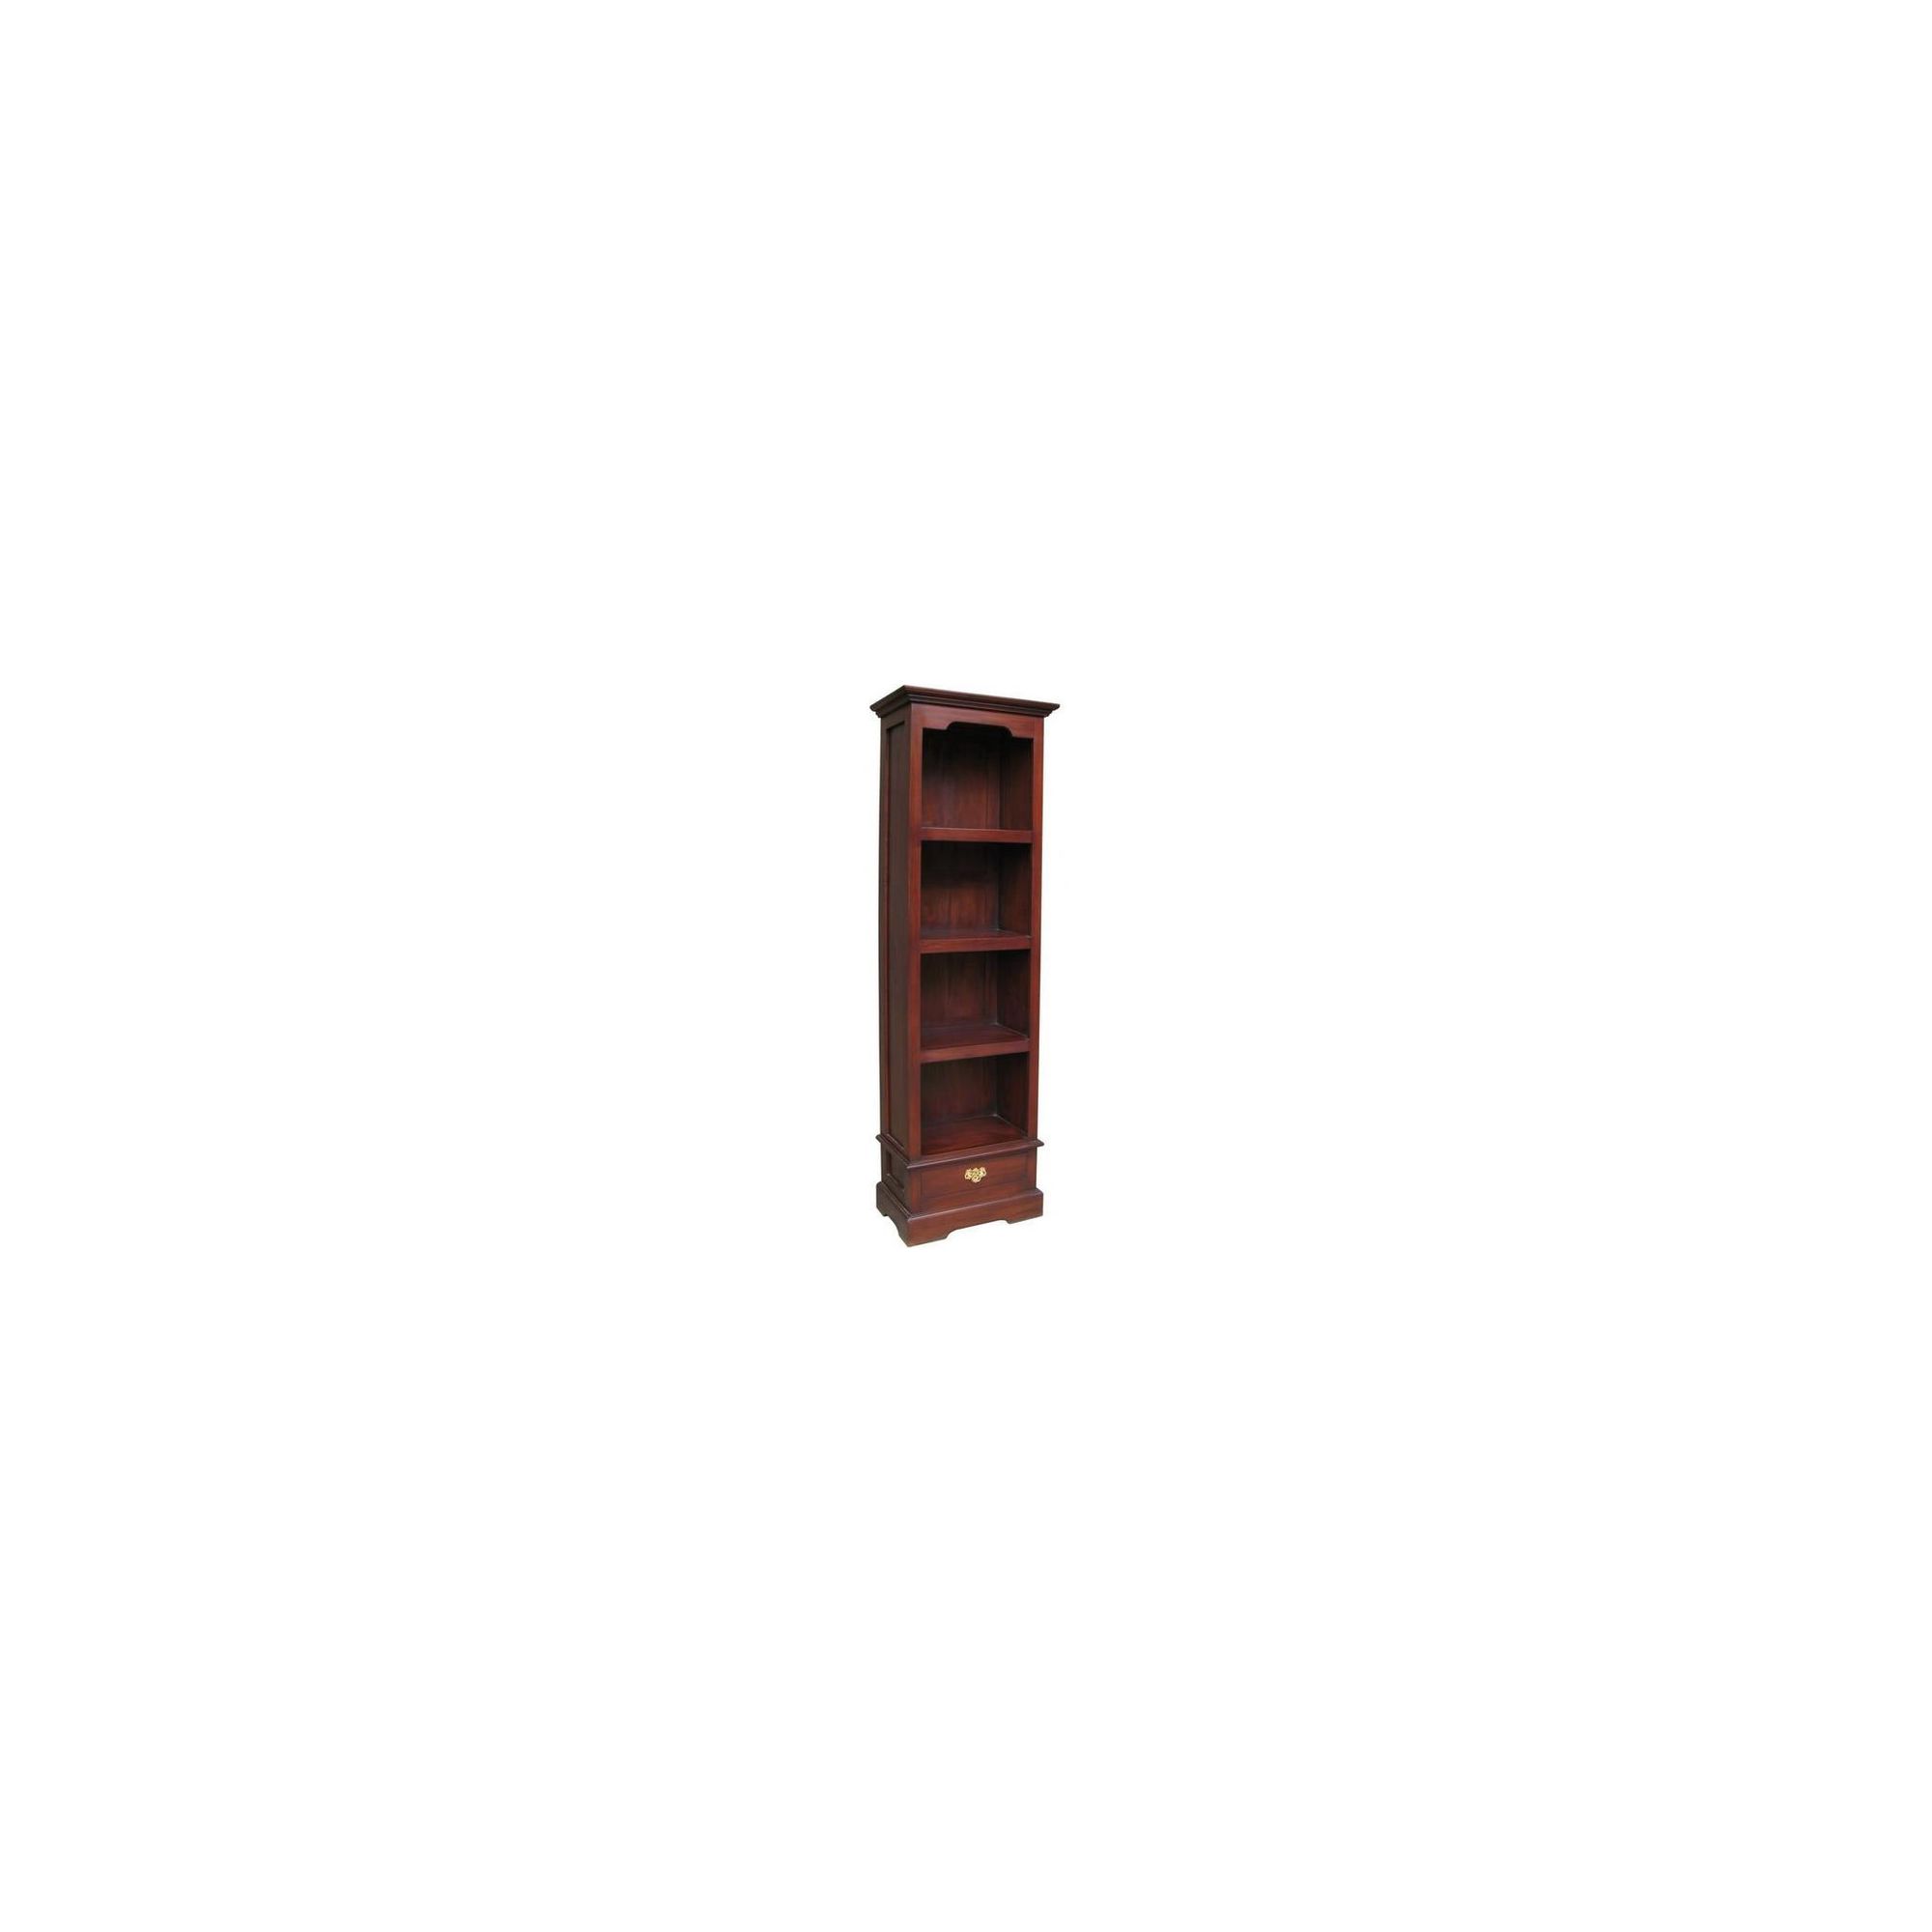 Lock stock and barrel Mahogany Narrow 1 Drawer Bookcase in Mahogany at Tesco Direct